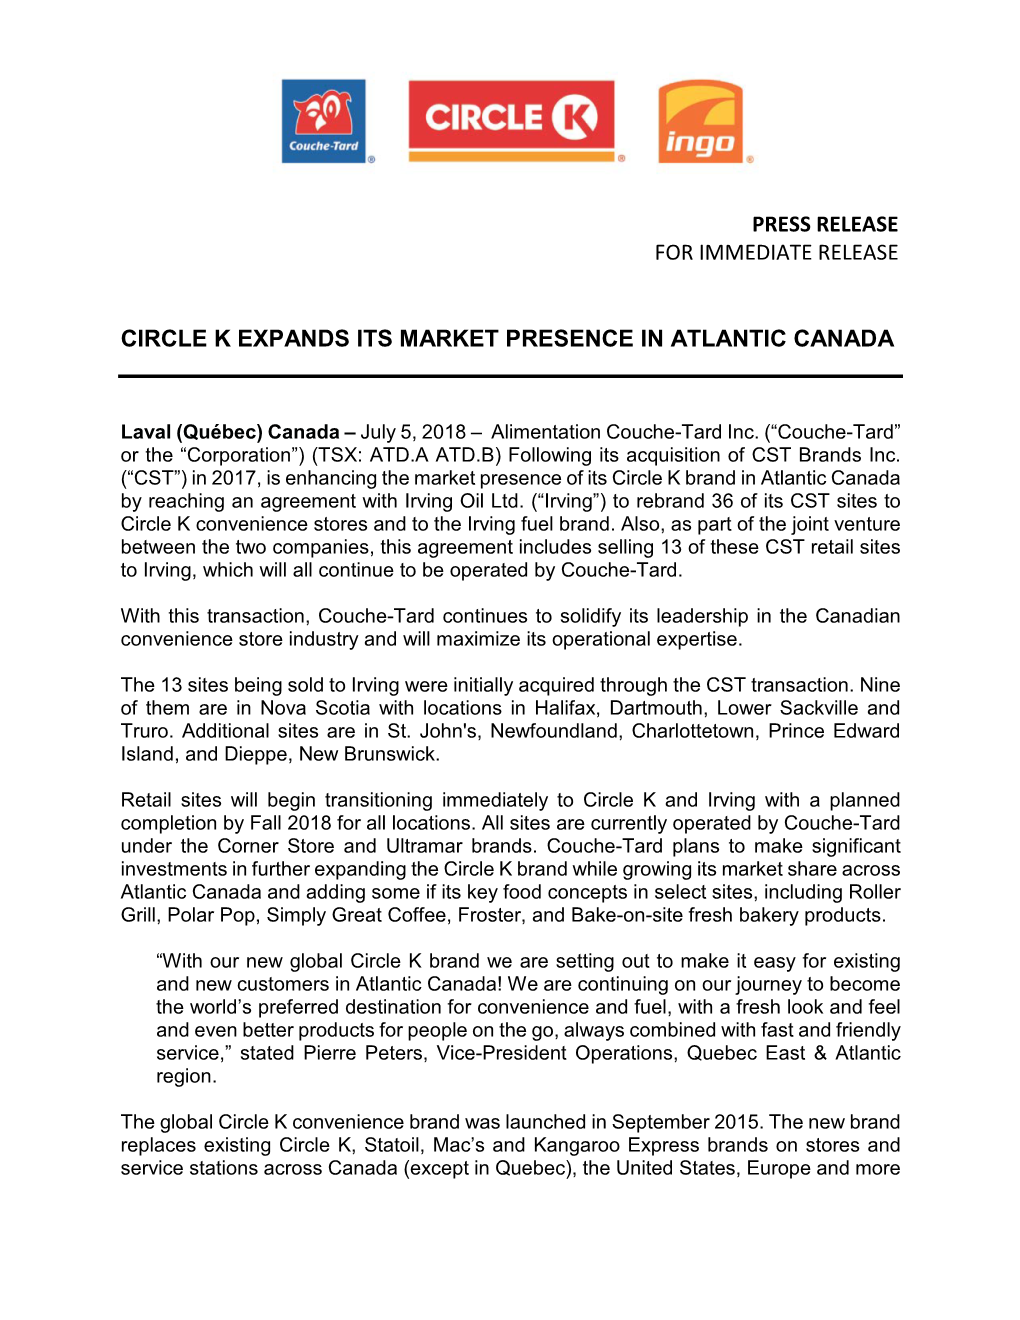 Circle K Expands Its Market Presence in Atlantic Canada